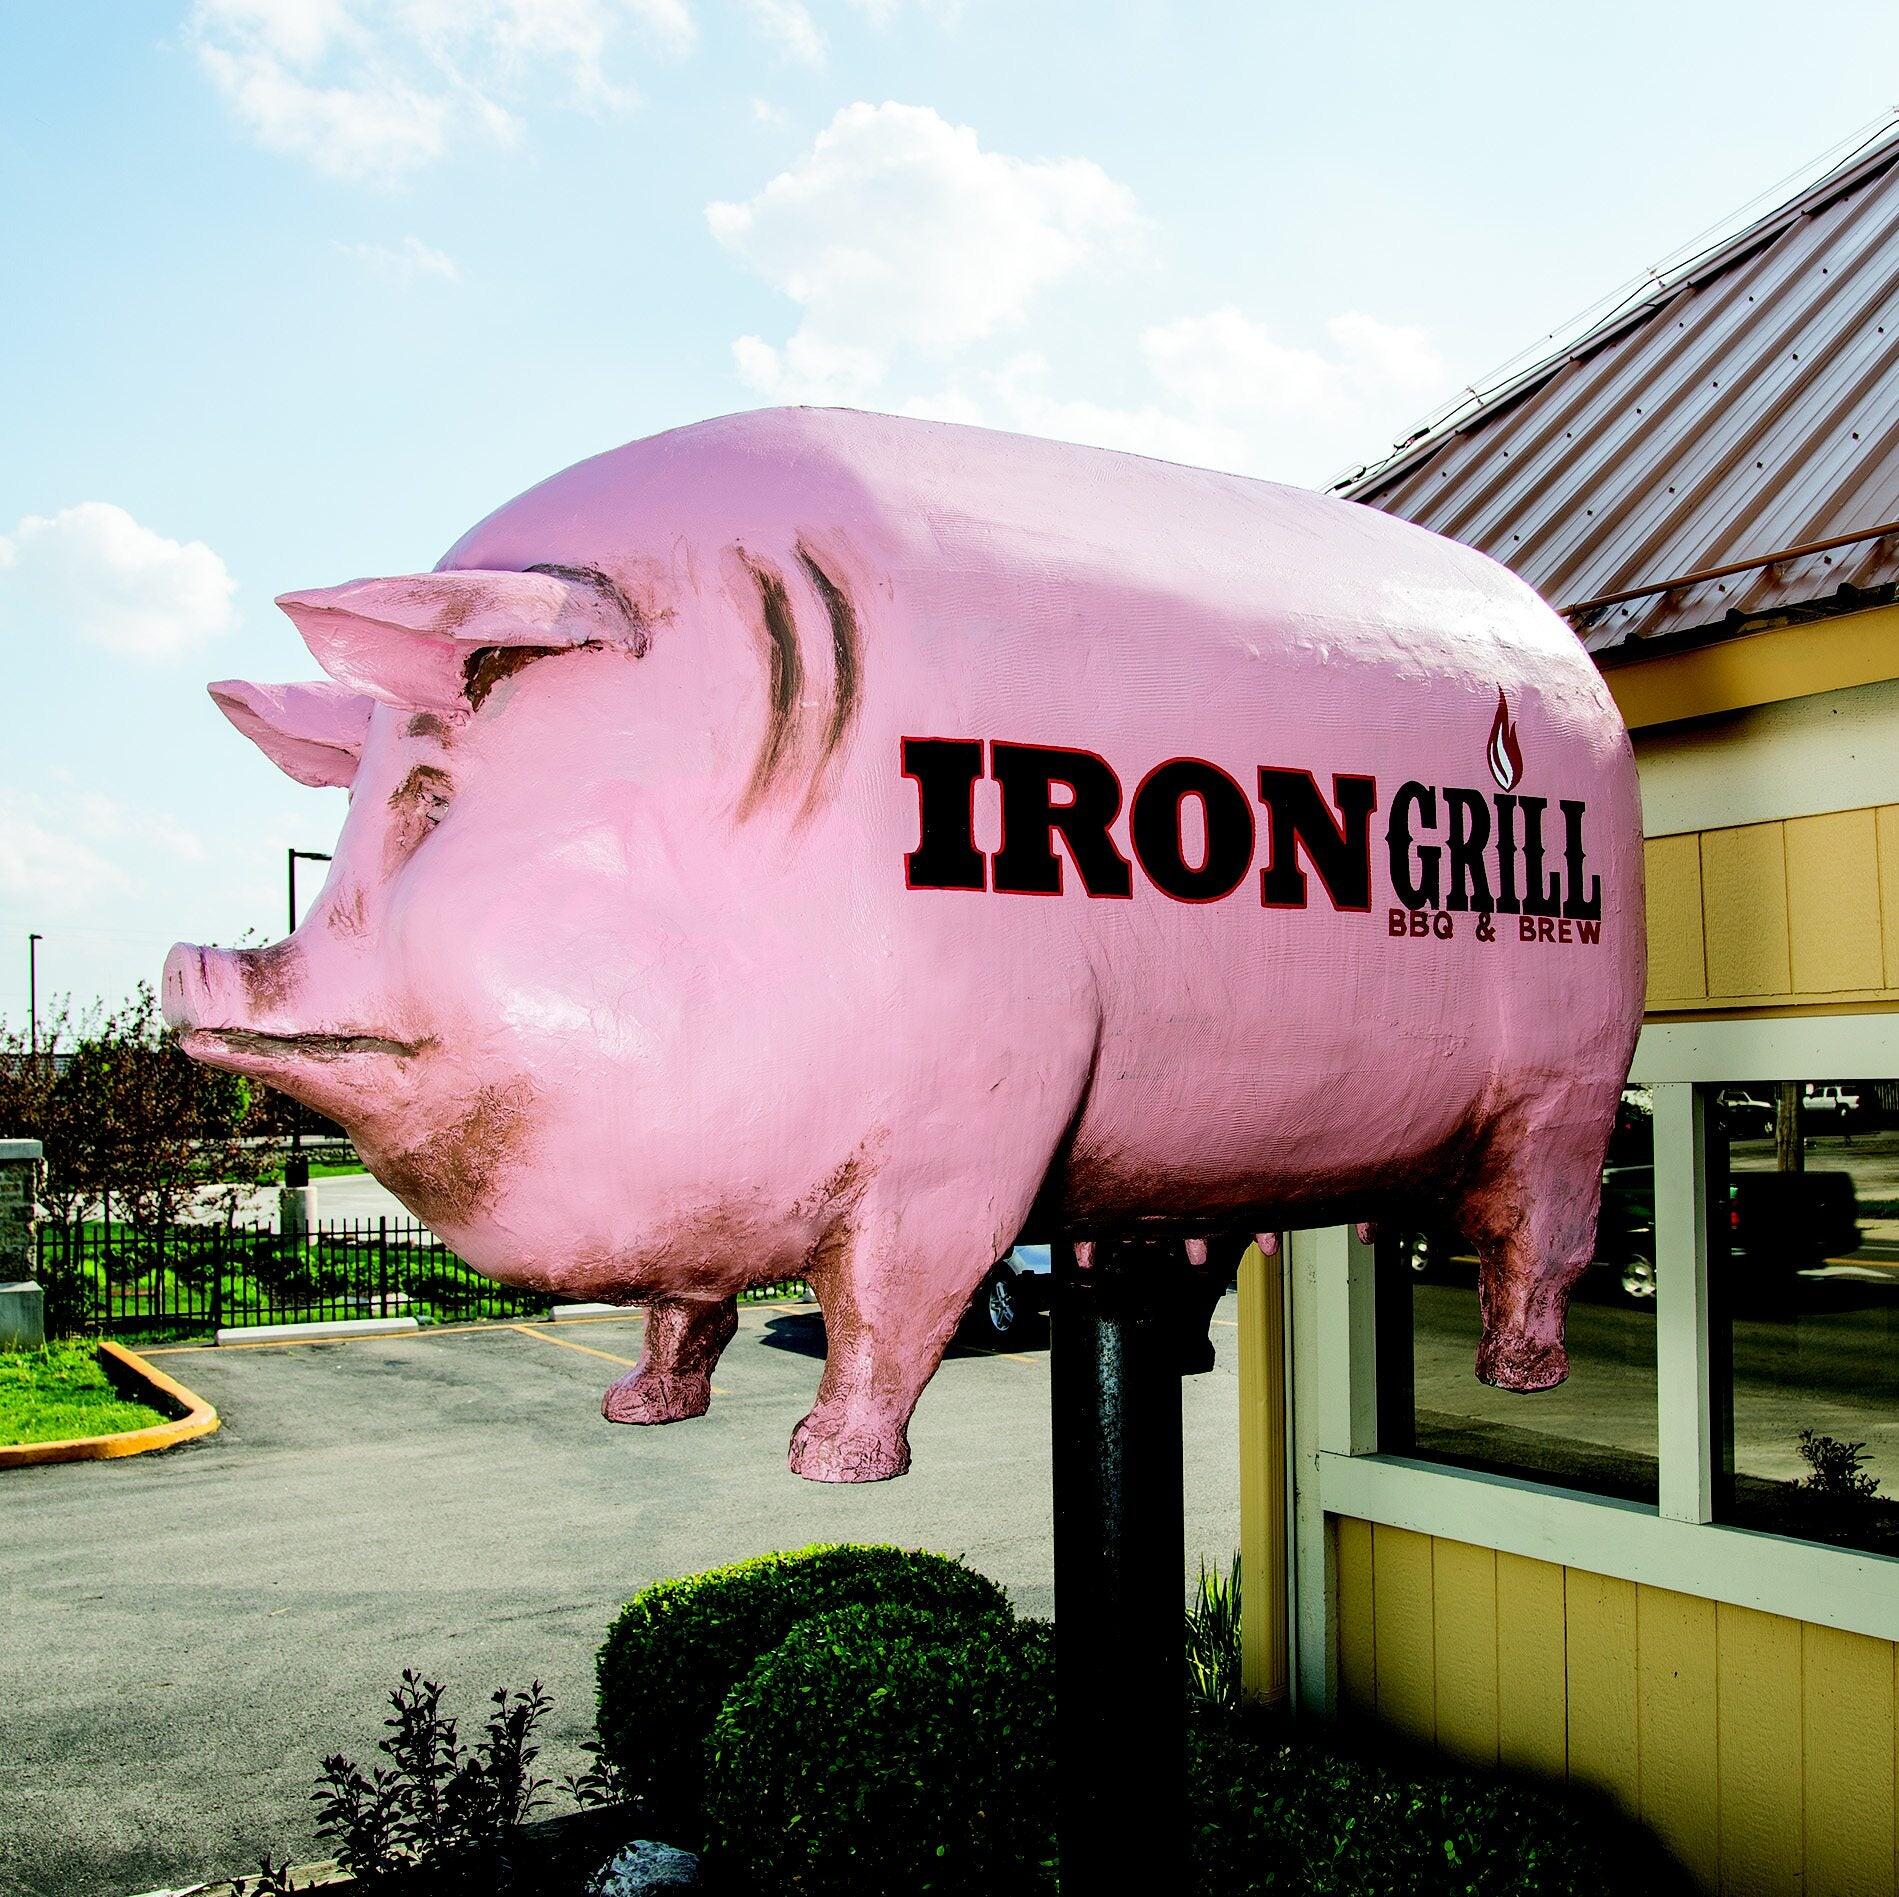 Iron Grill BBQ & Brew - Barbecue Restaurant - Columbus, Ohio